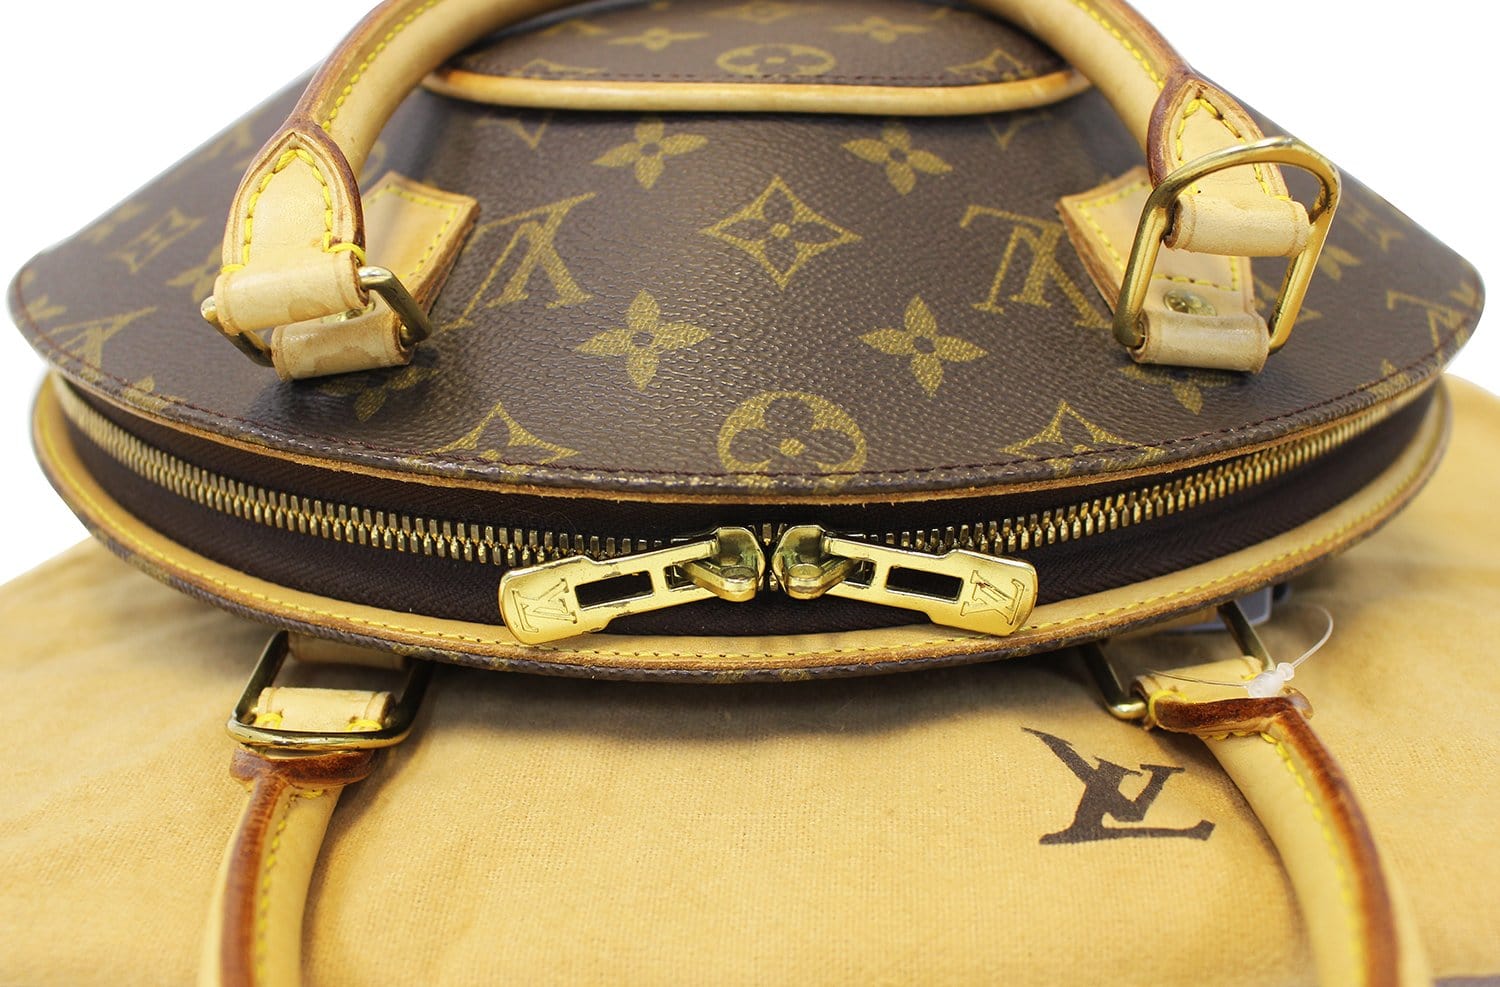 Louis Vuitton Monogram Ellipse PM - Brown Handle Bags, Handbags